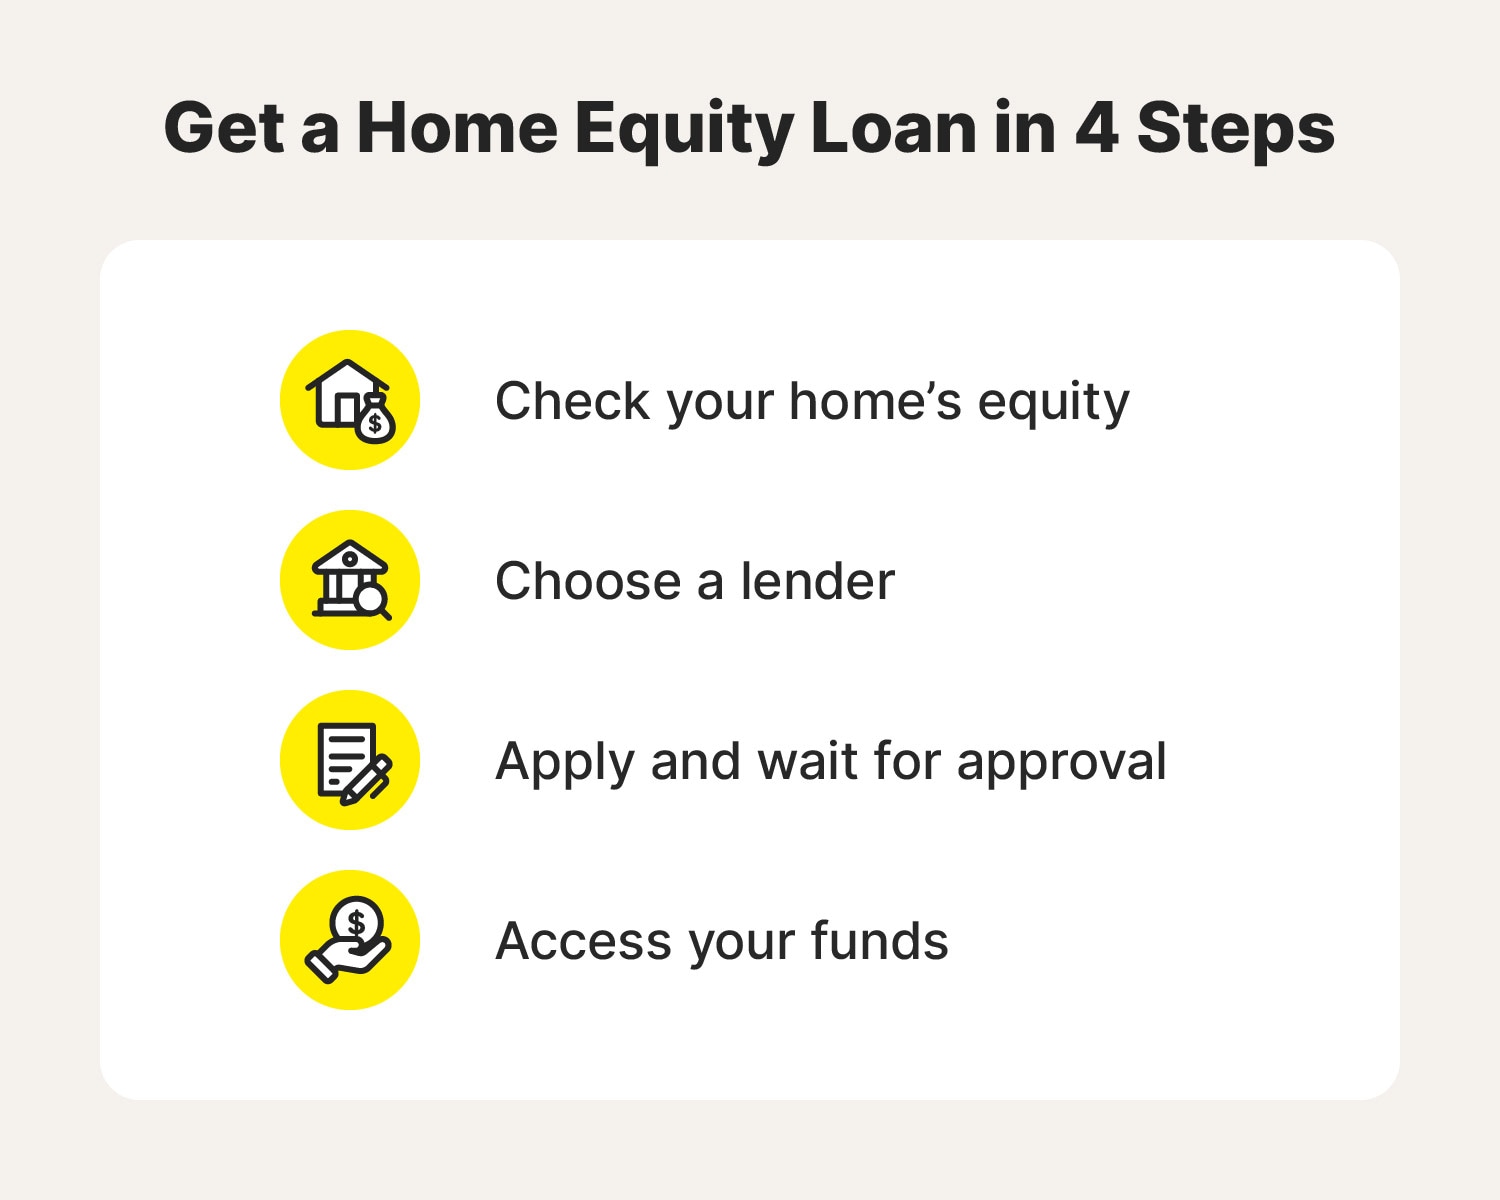 Home equity loan application steps. 